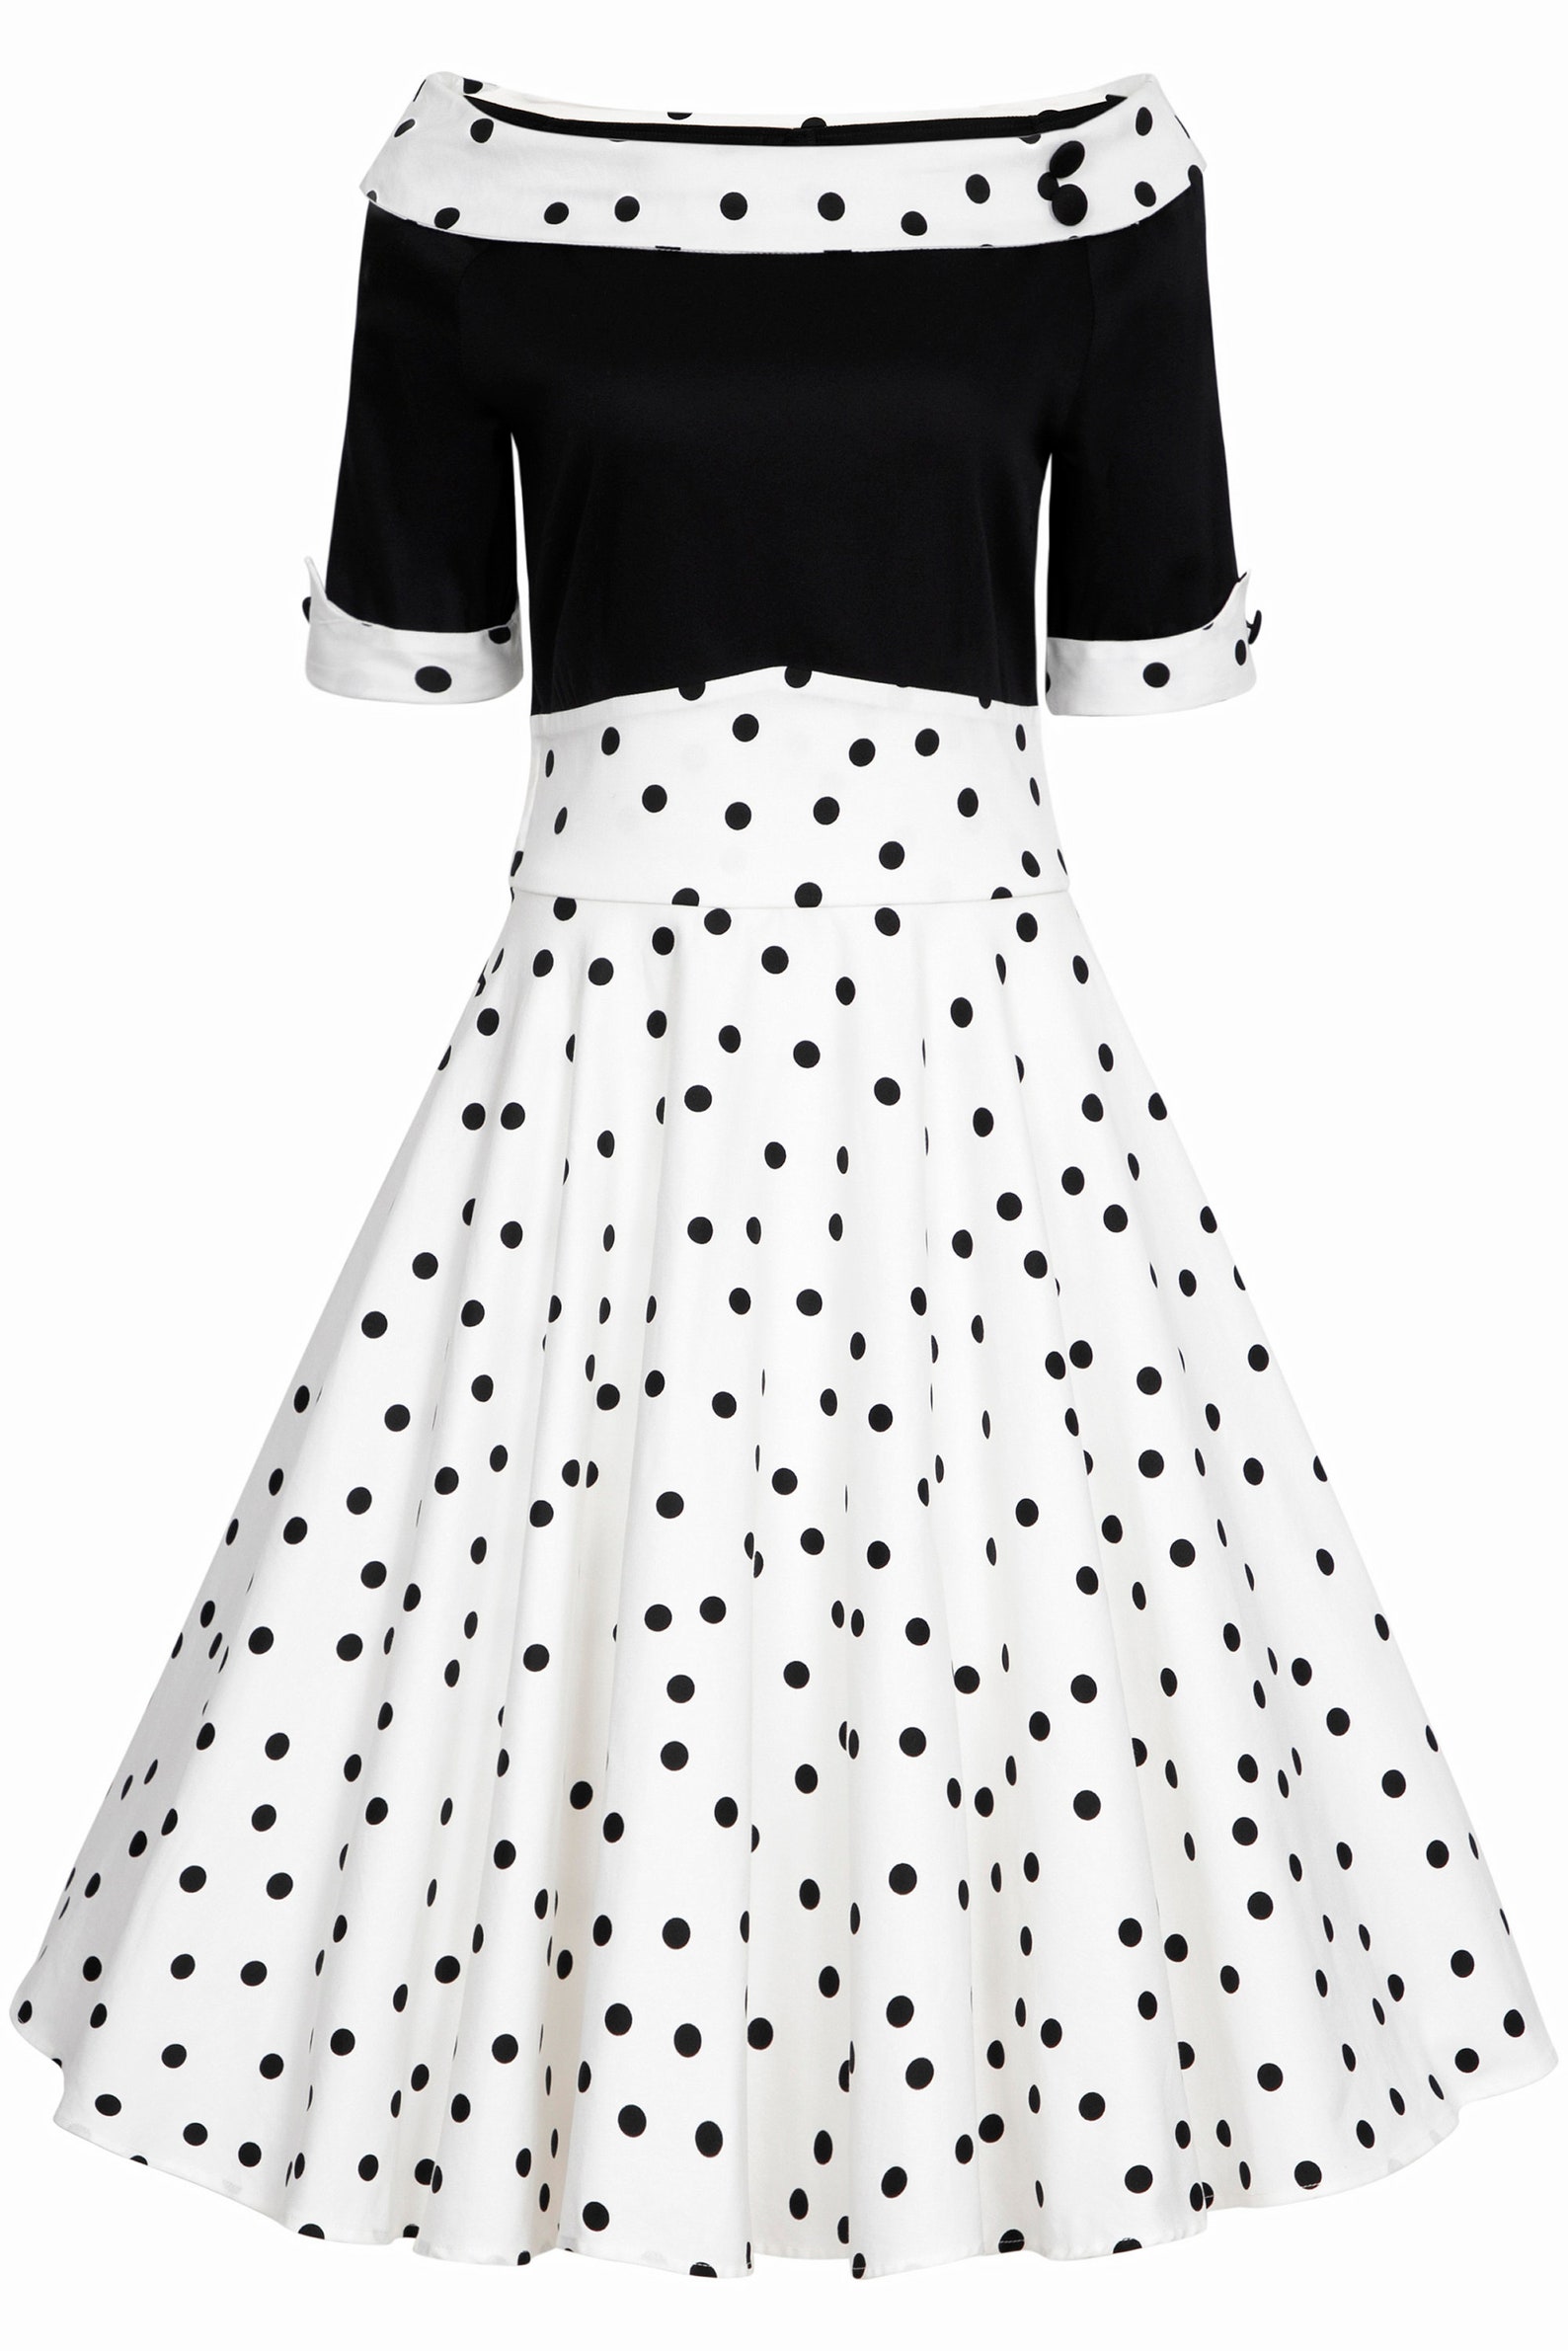 Black White Polka Dot Swing Dress | Etsy